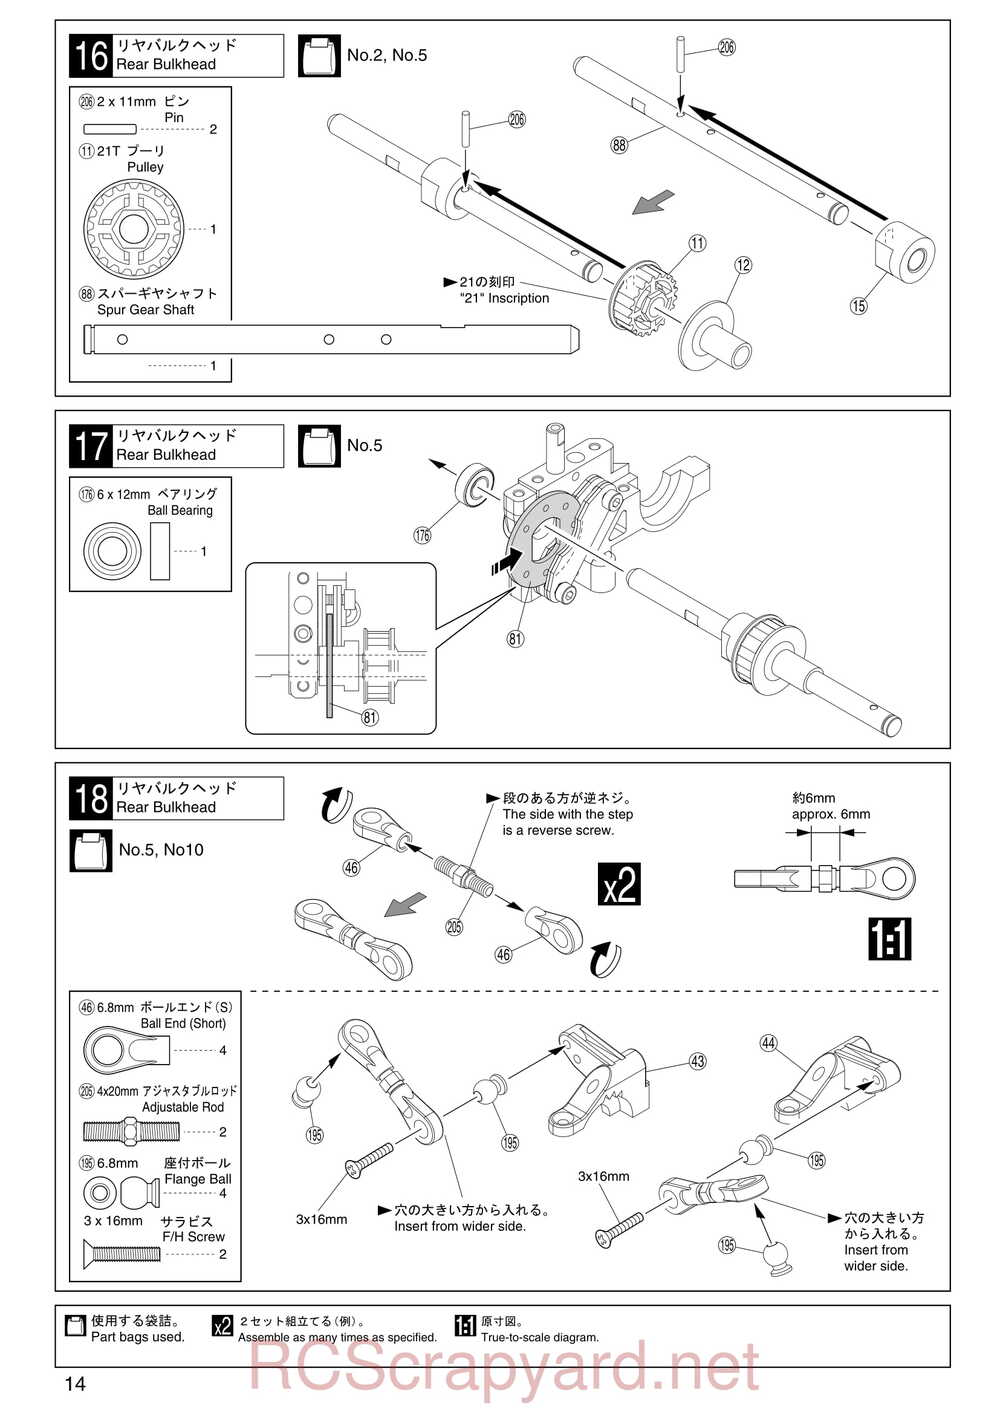 Kyosho - 31256 - V-One RRR - Manual - Page 14